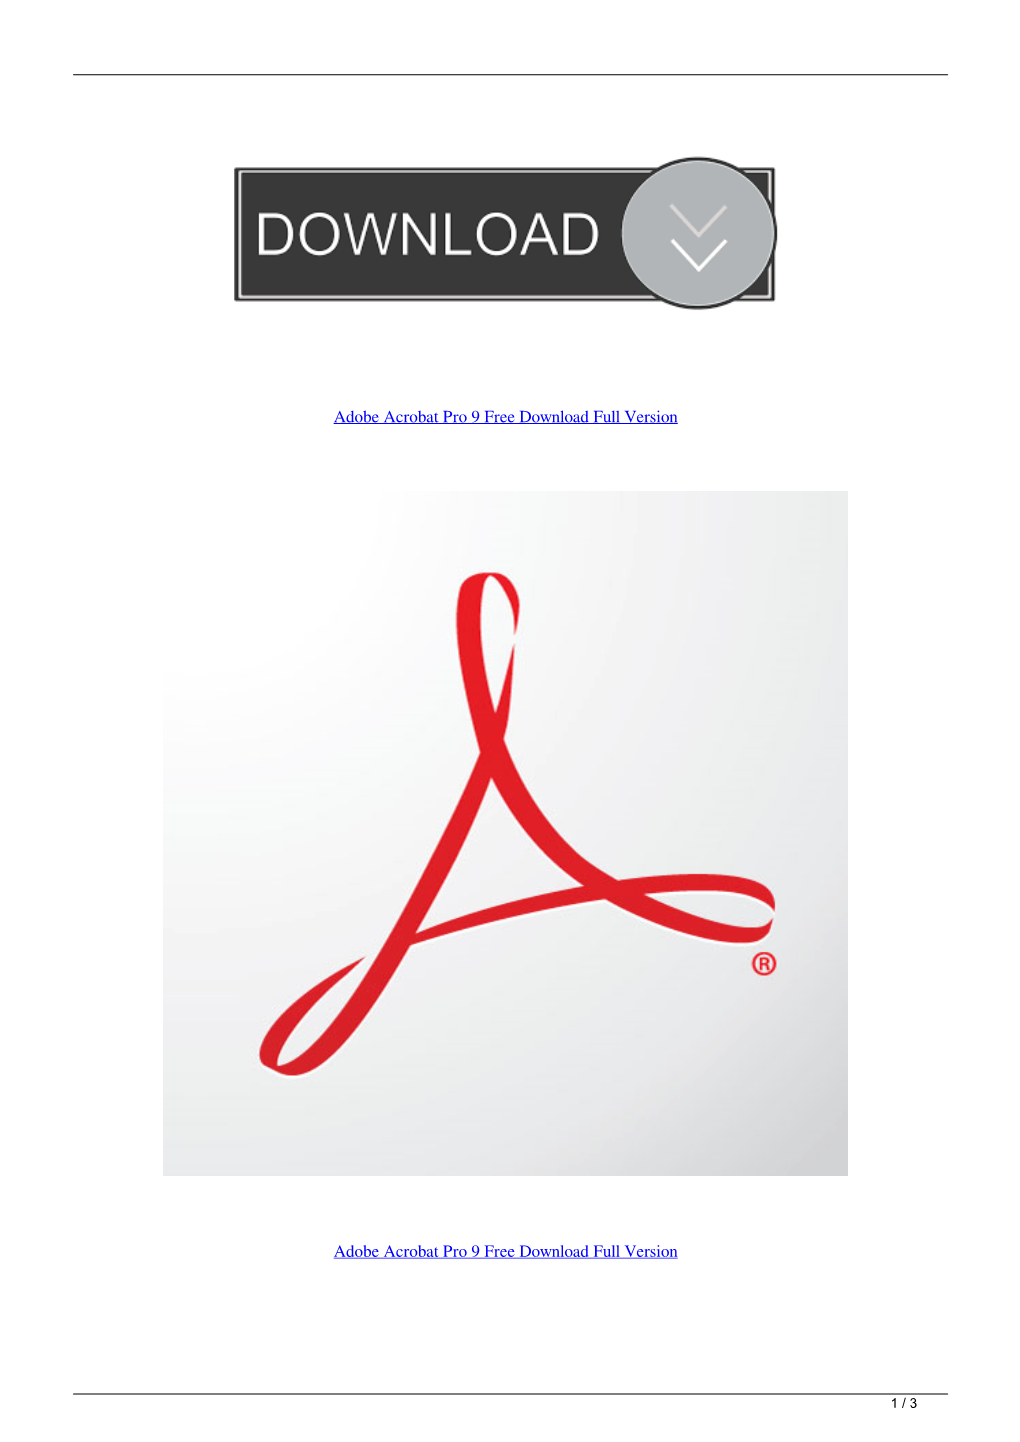 adobe acrobat pro 9.0 direct download link